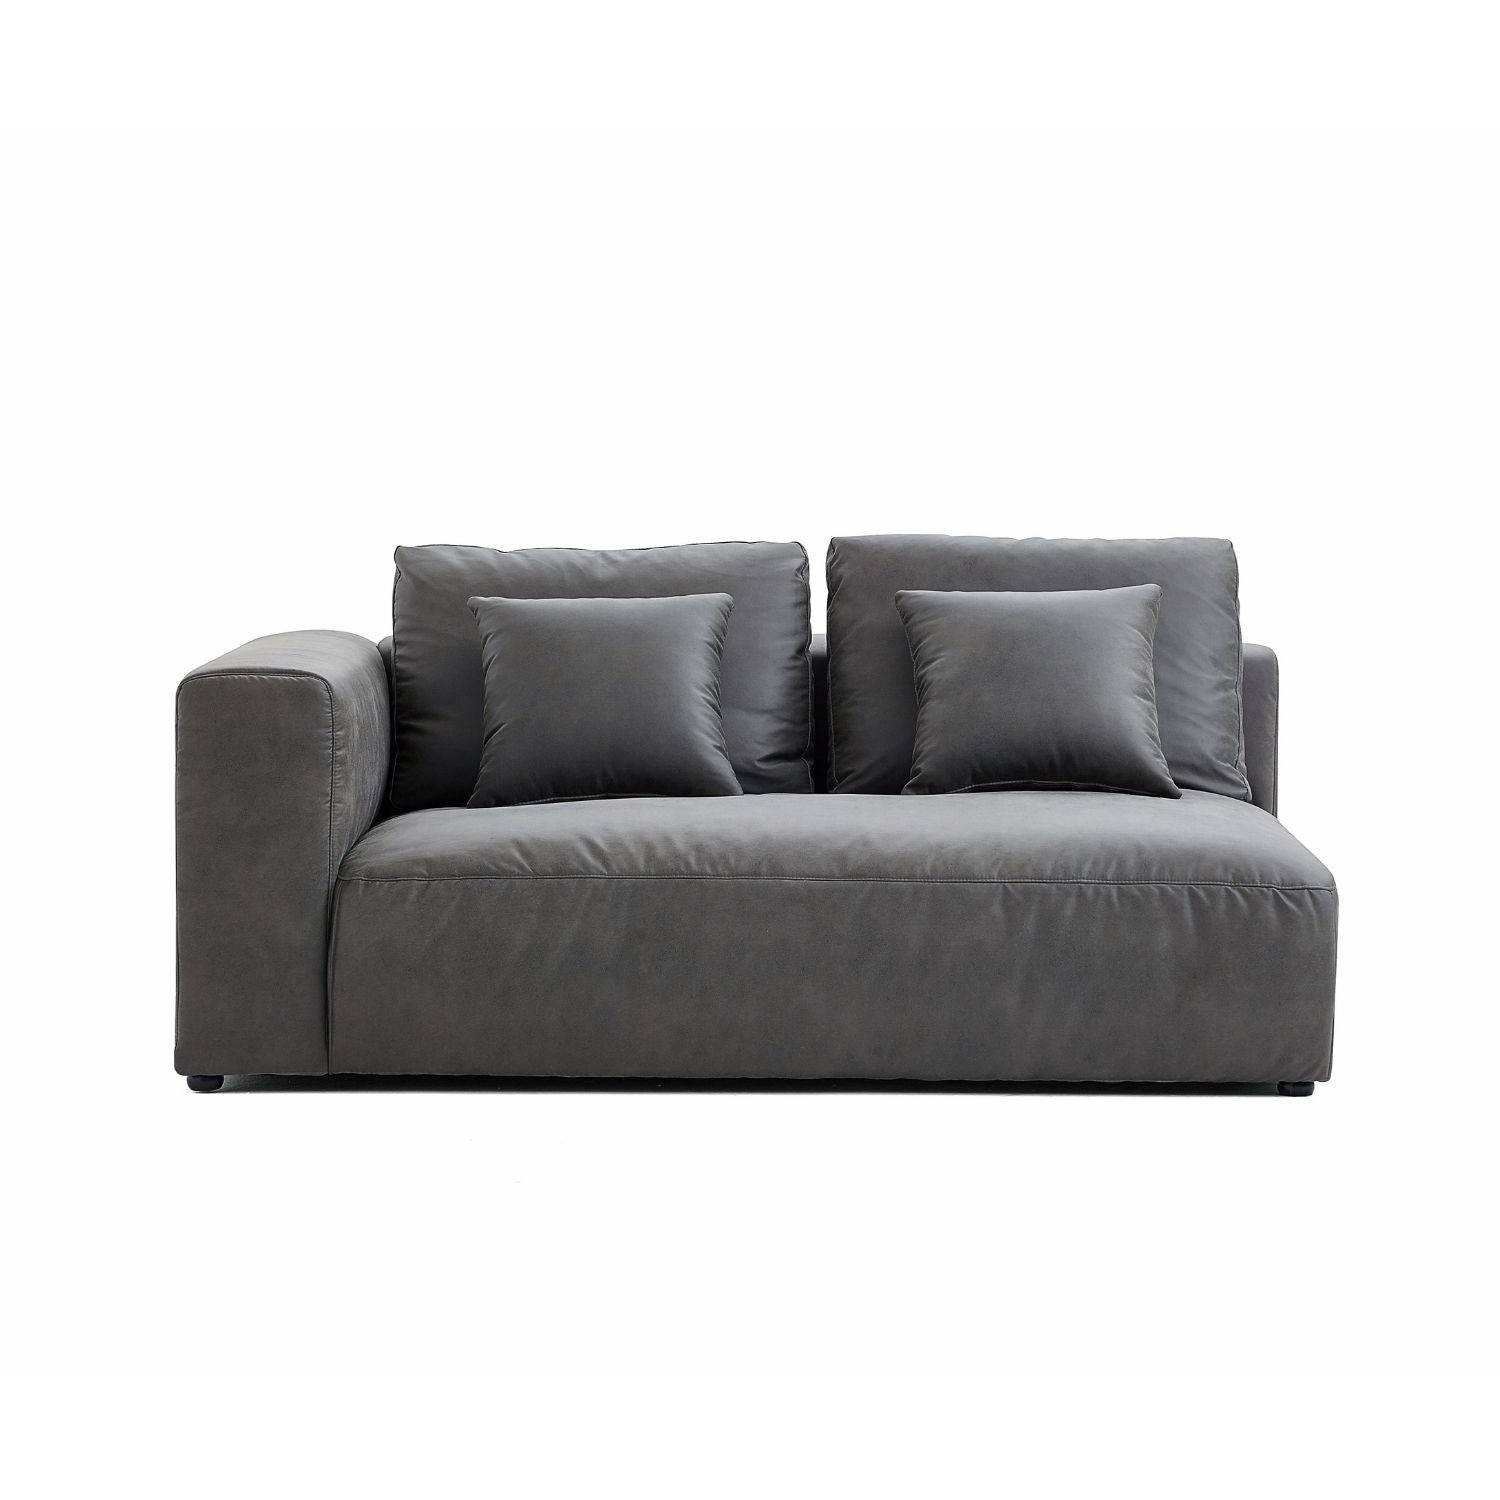 The 5th Side Sofa Sofa Foundry Dark Grey Facing Left 67 Inch